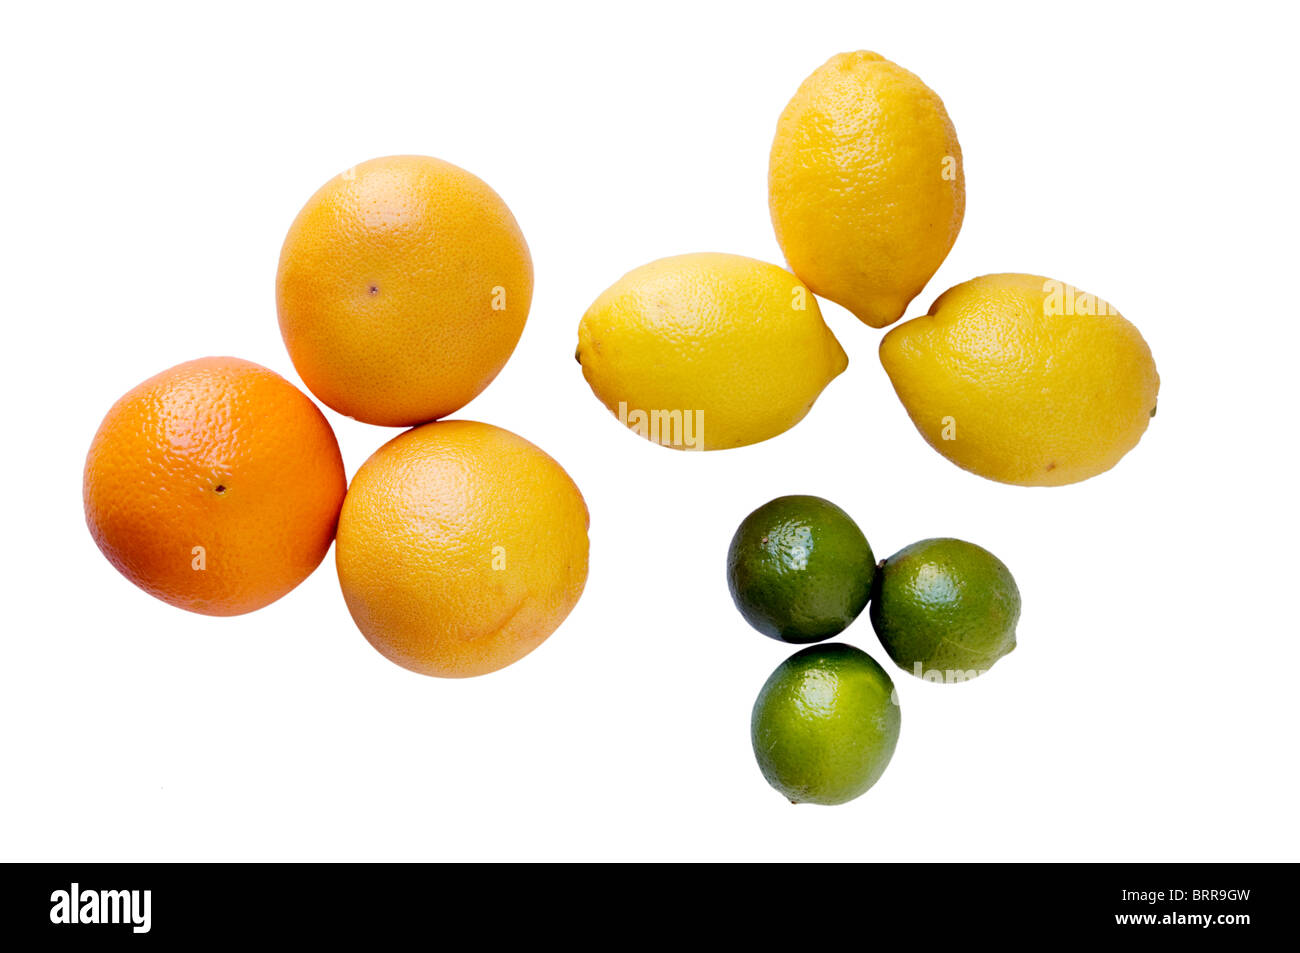 oranges,lemons and lime Stock Photo